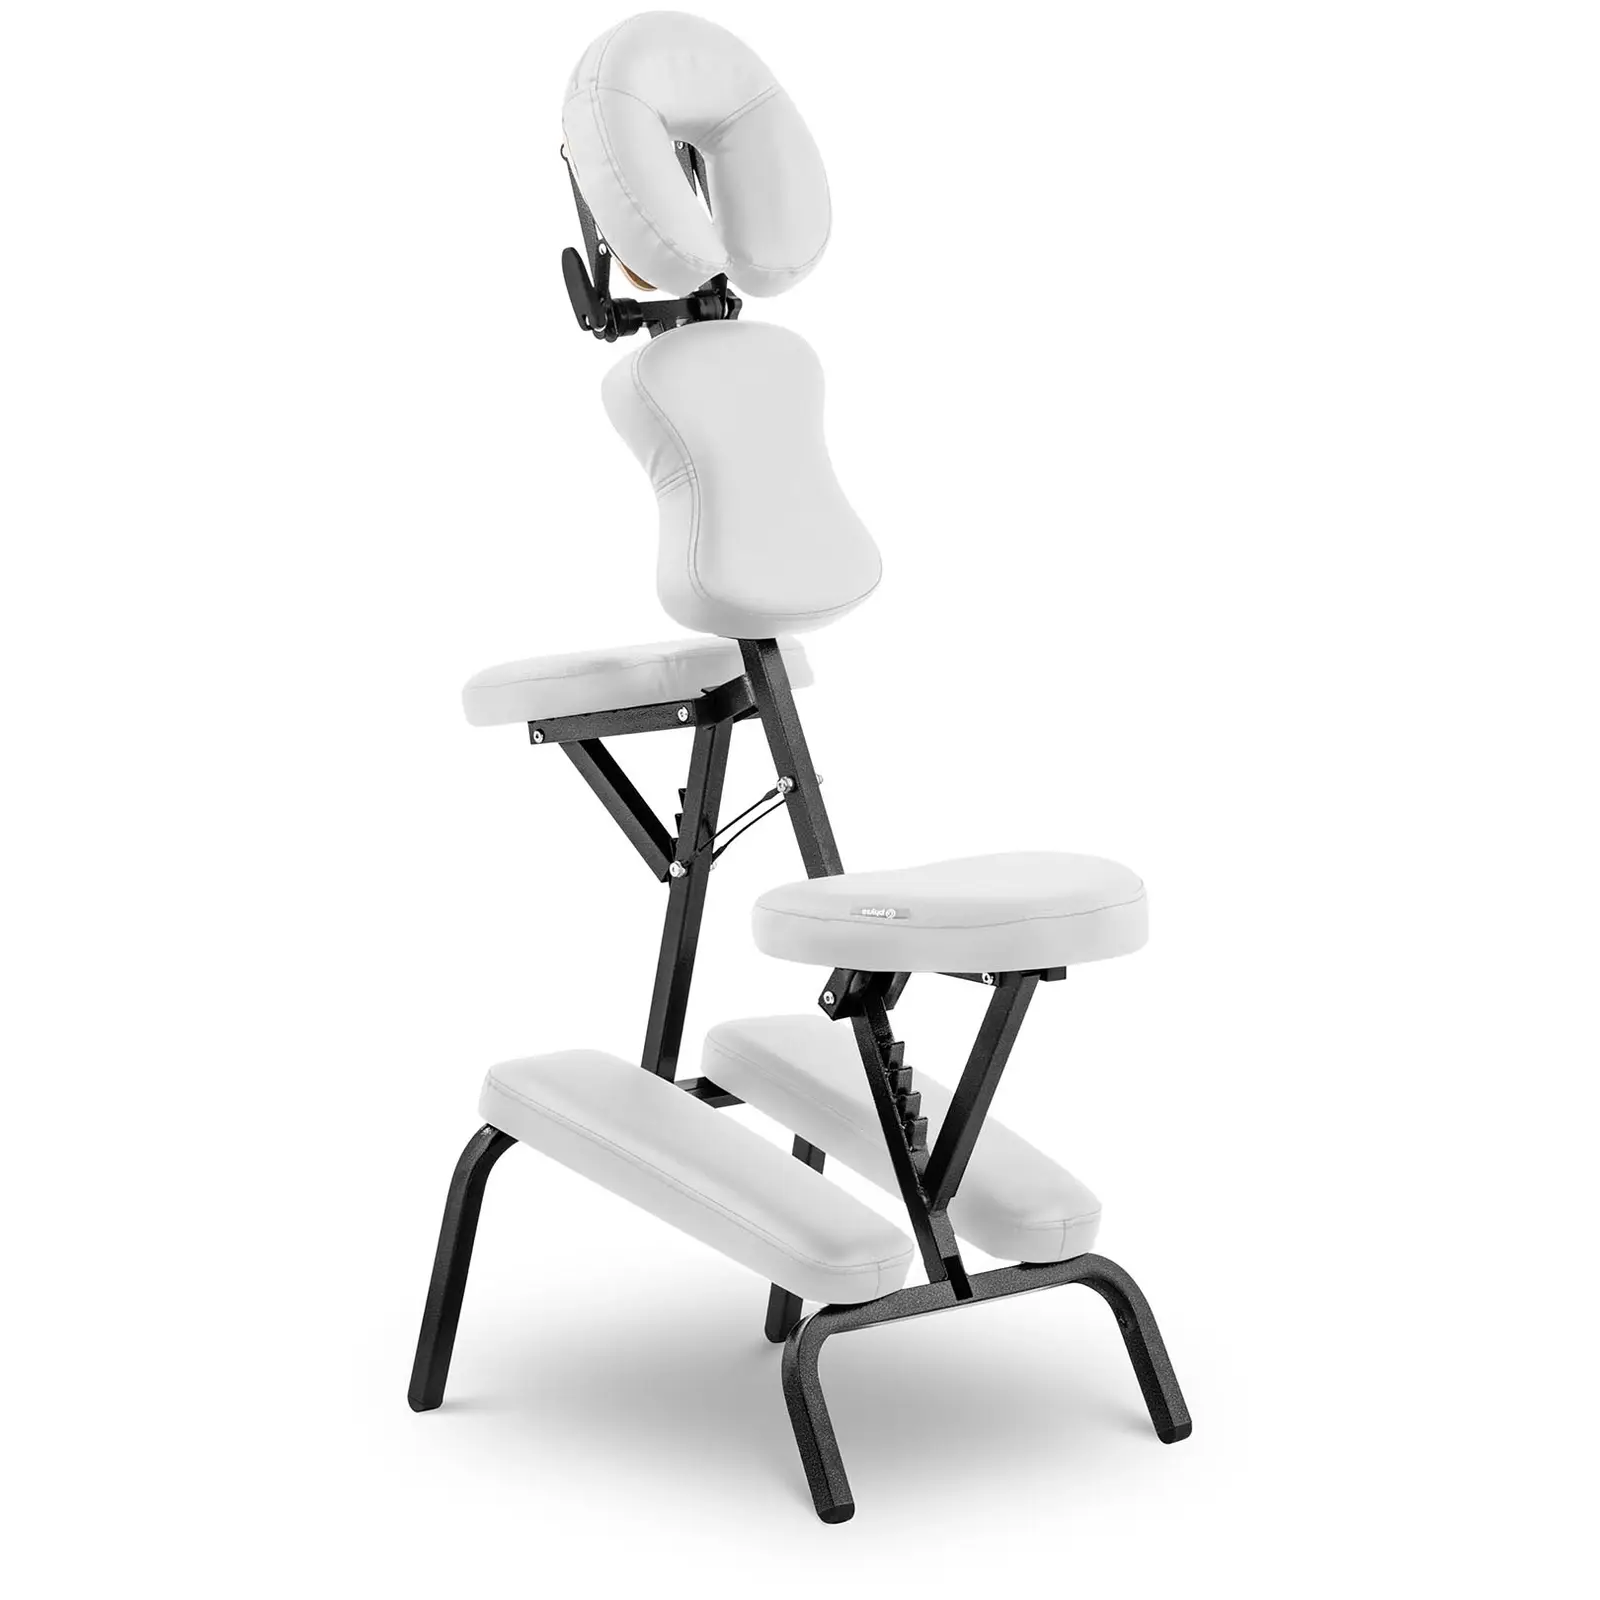 B-zboží Skládací masážní židle - 26 x 46 x 104 cm - 130 kg - Bílá